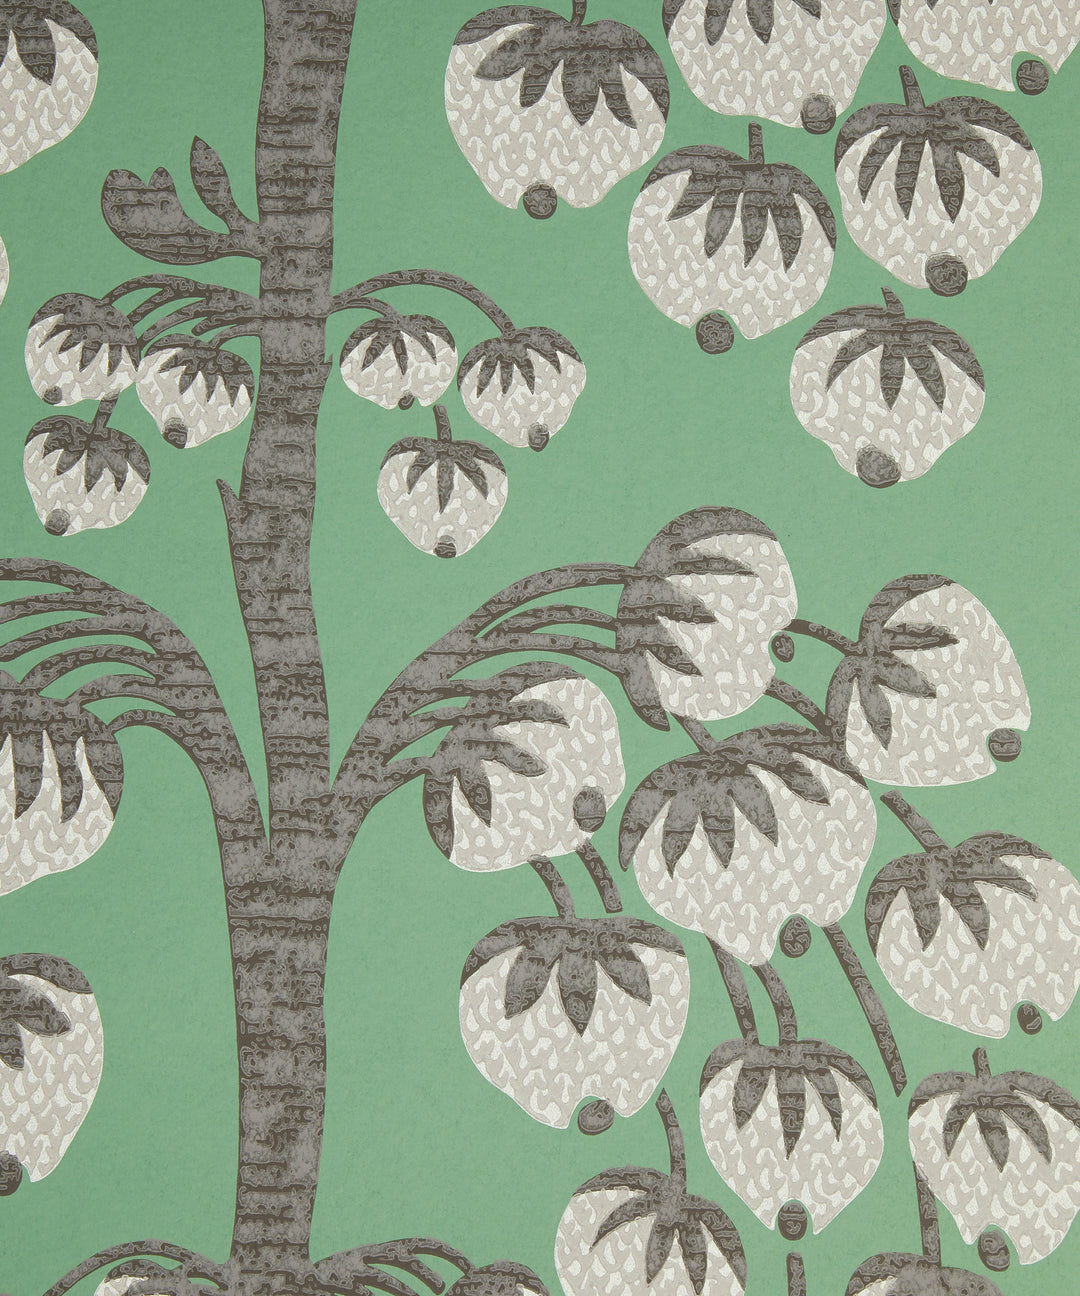 liberty-fabrics-teal-jade-green-botanical-atlas-berry-tree-wallpaper-vine-stripe-designed-in-uk-made-in-italy